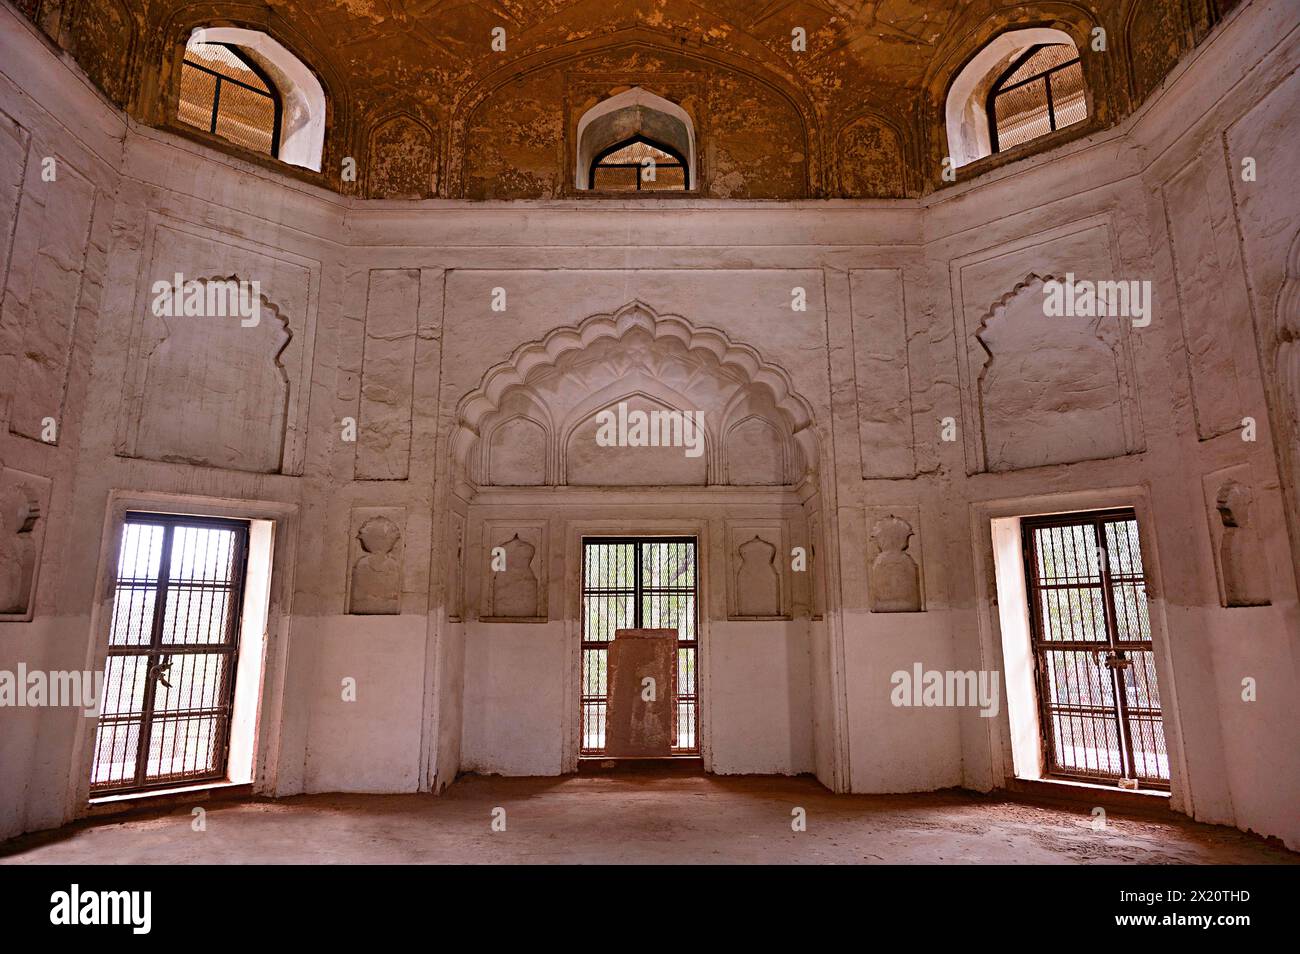 Interiors, Tomb of Sadiq Khan, Sikandra, Agra, Uttar Pradesh, India Stock Photo